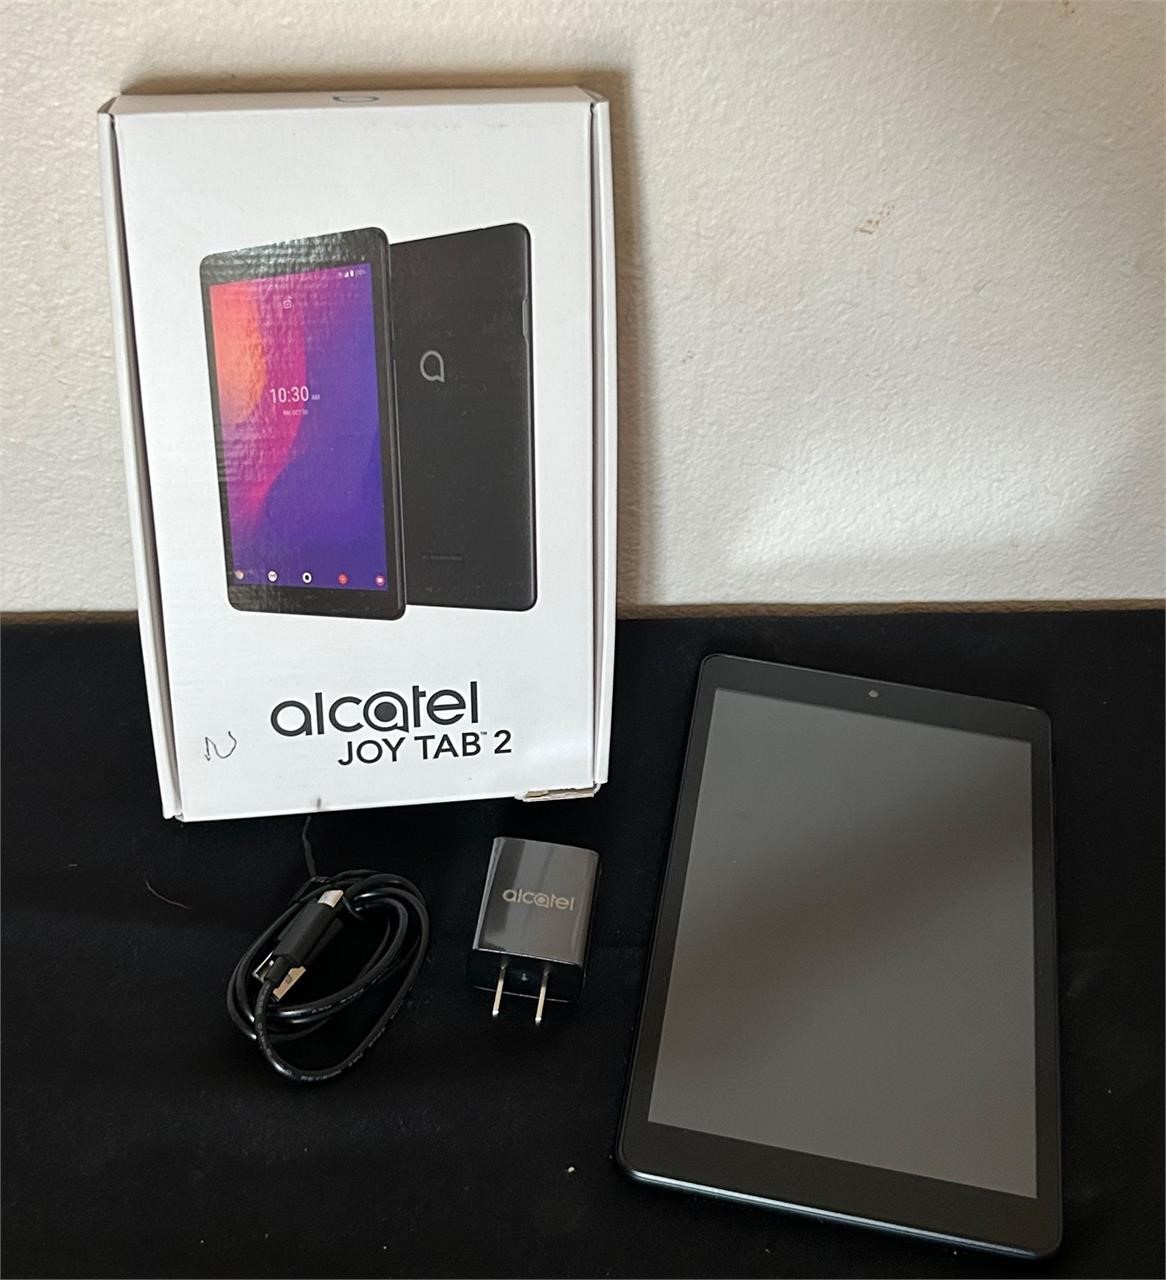 Android Alcatel Joy Tablet 2